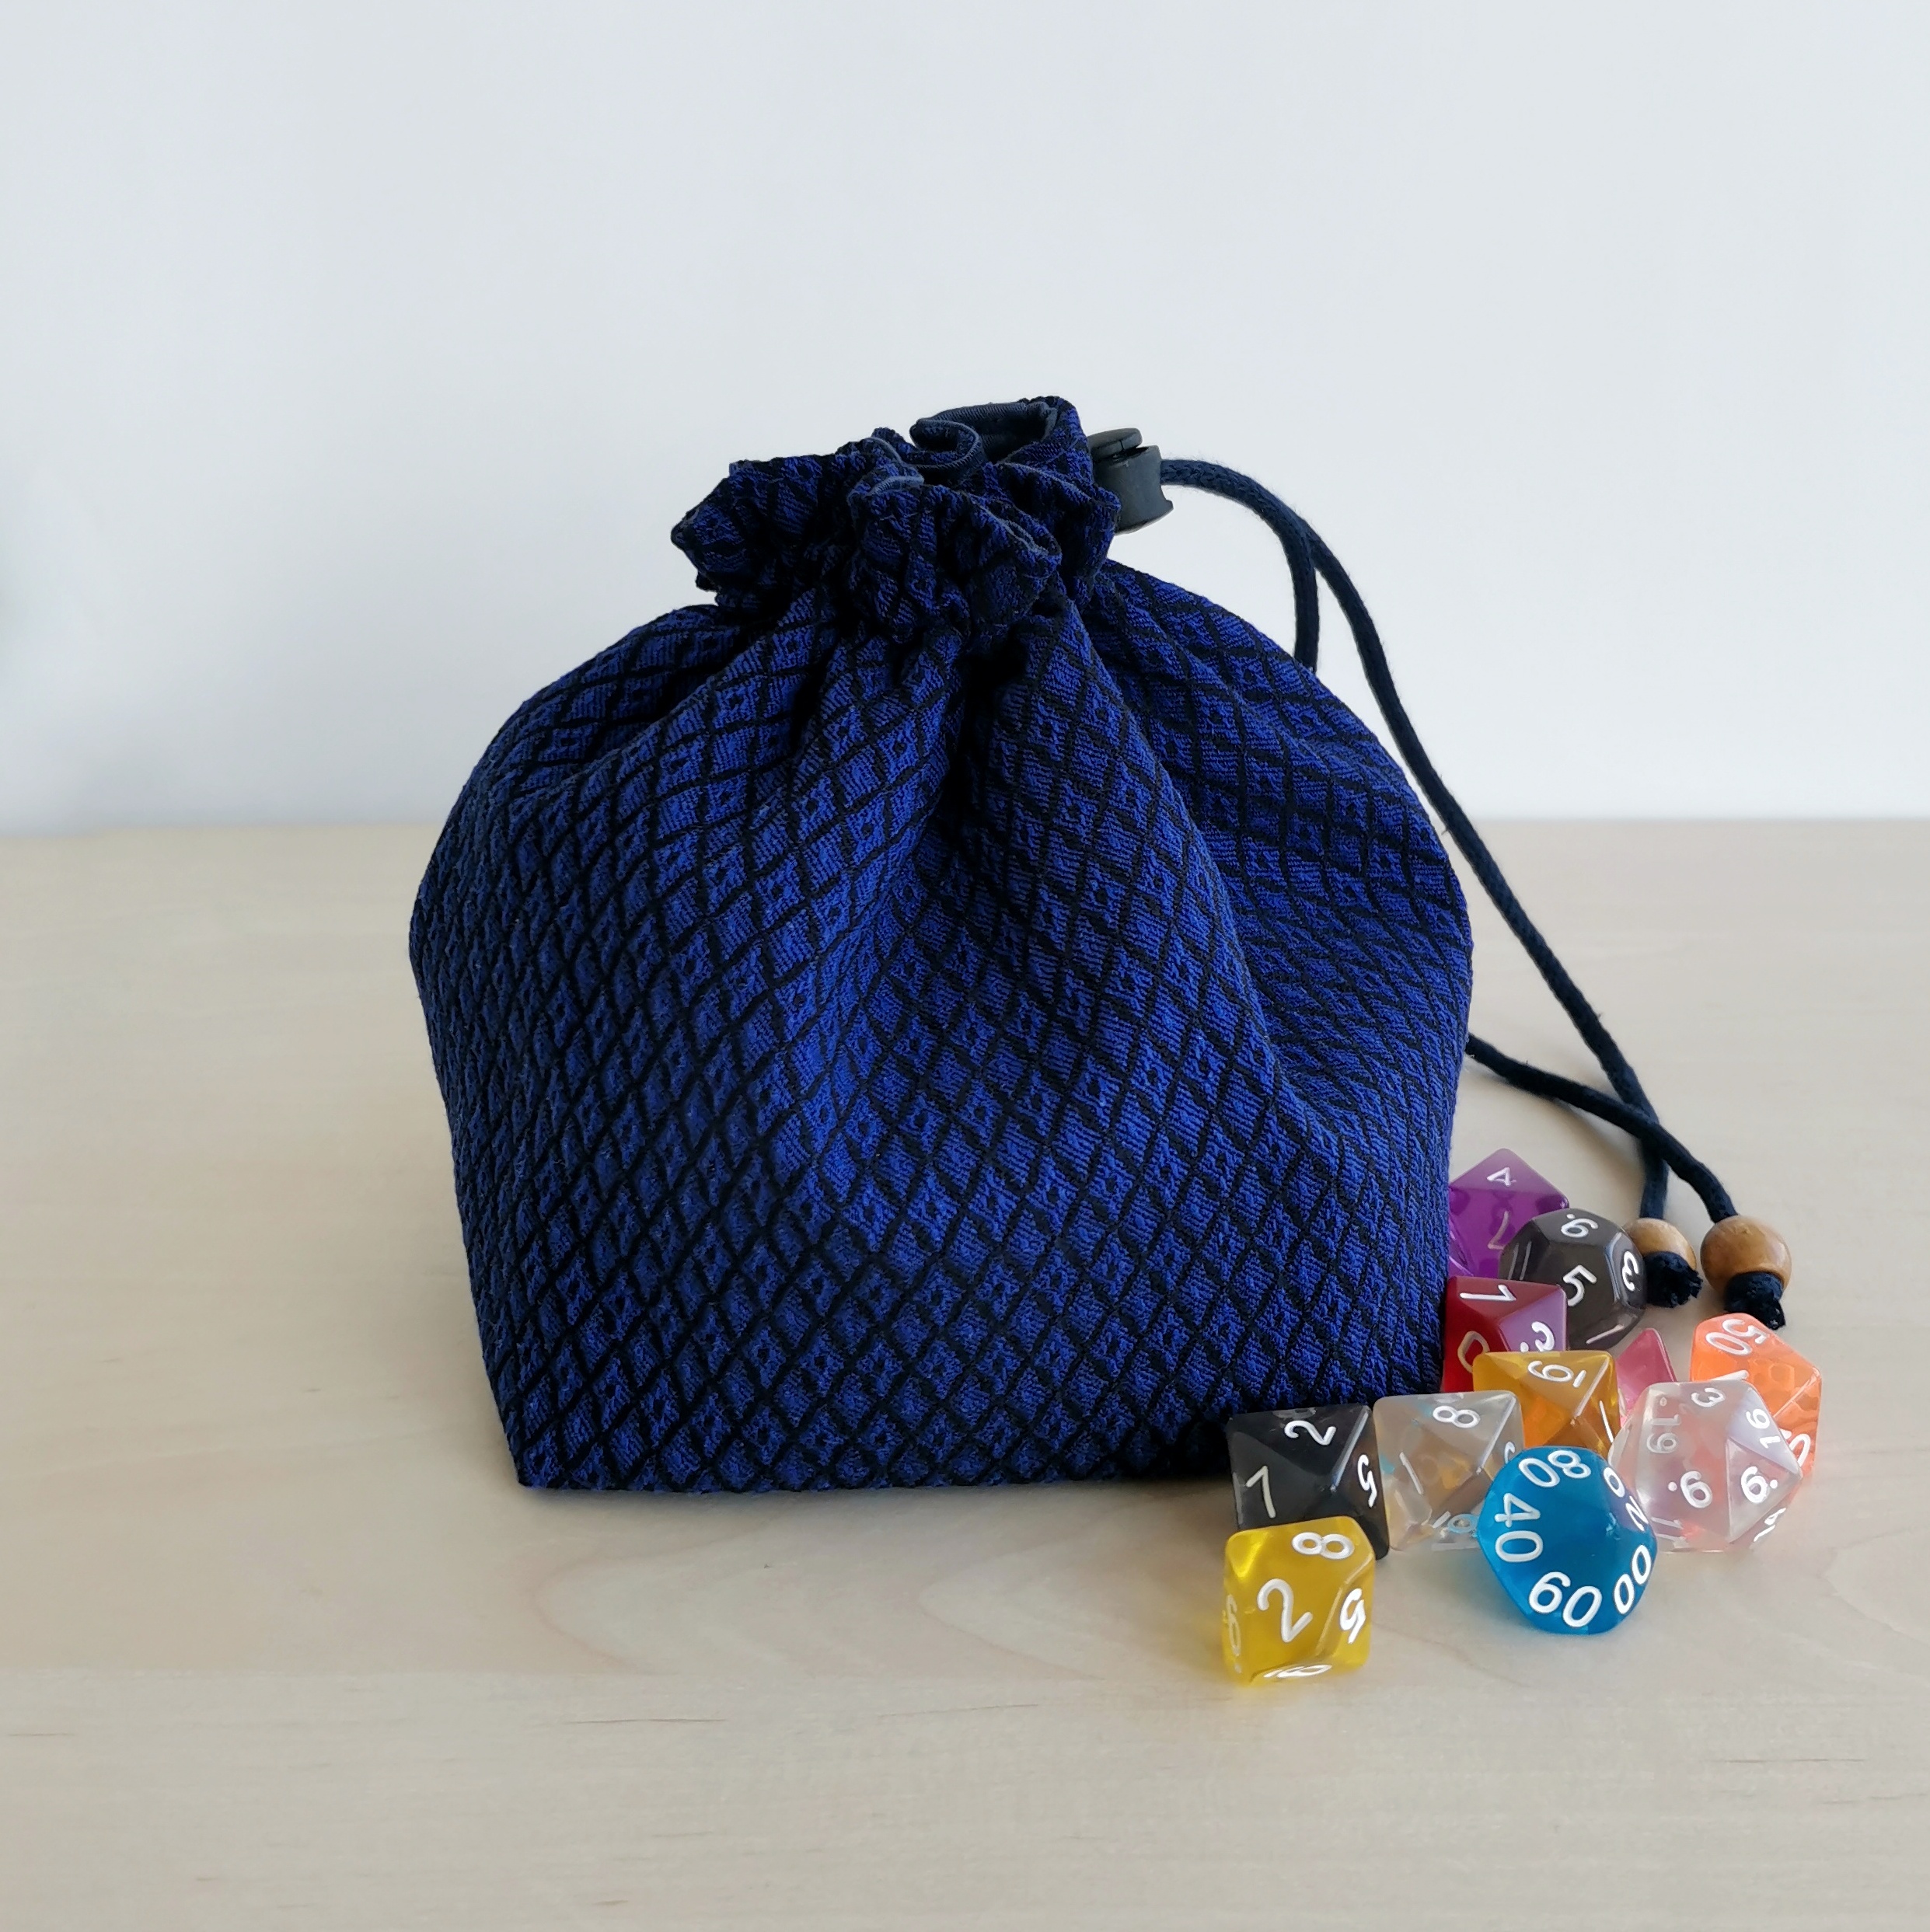 Blue jacquard dice bag with pockets